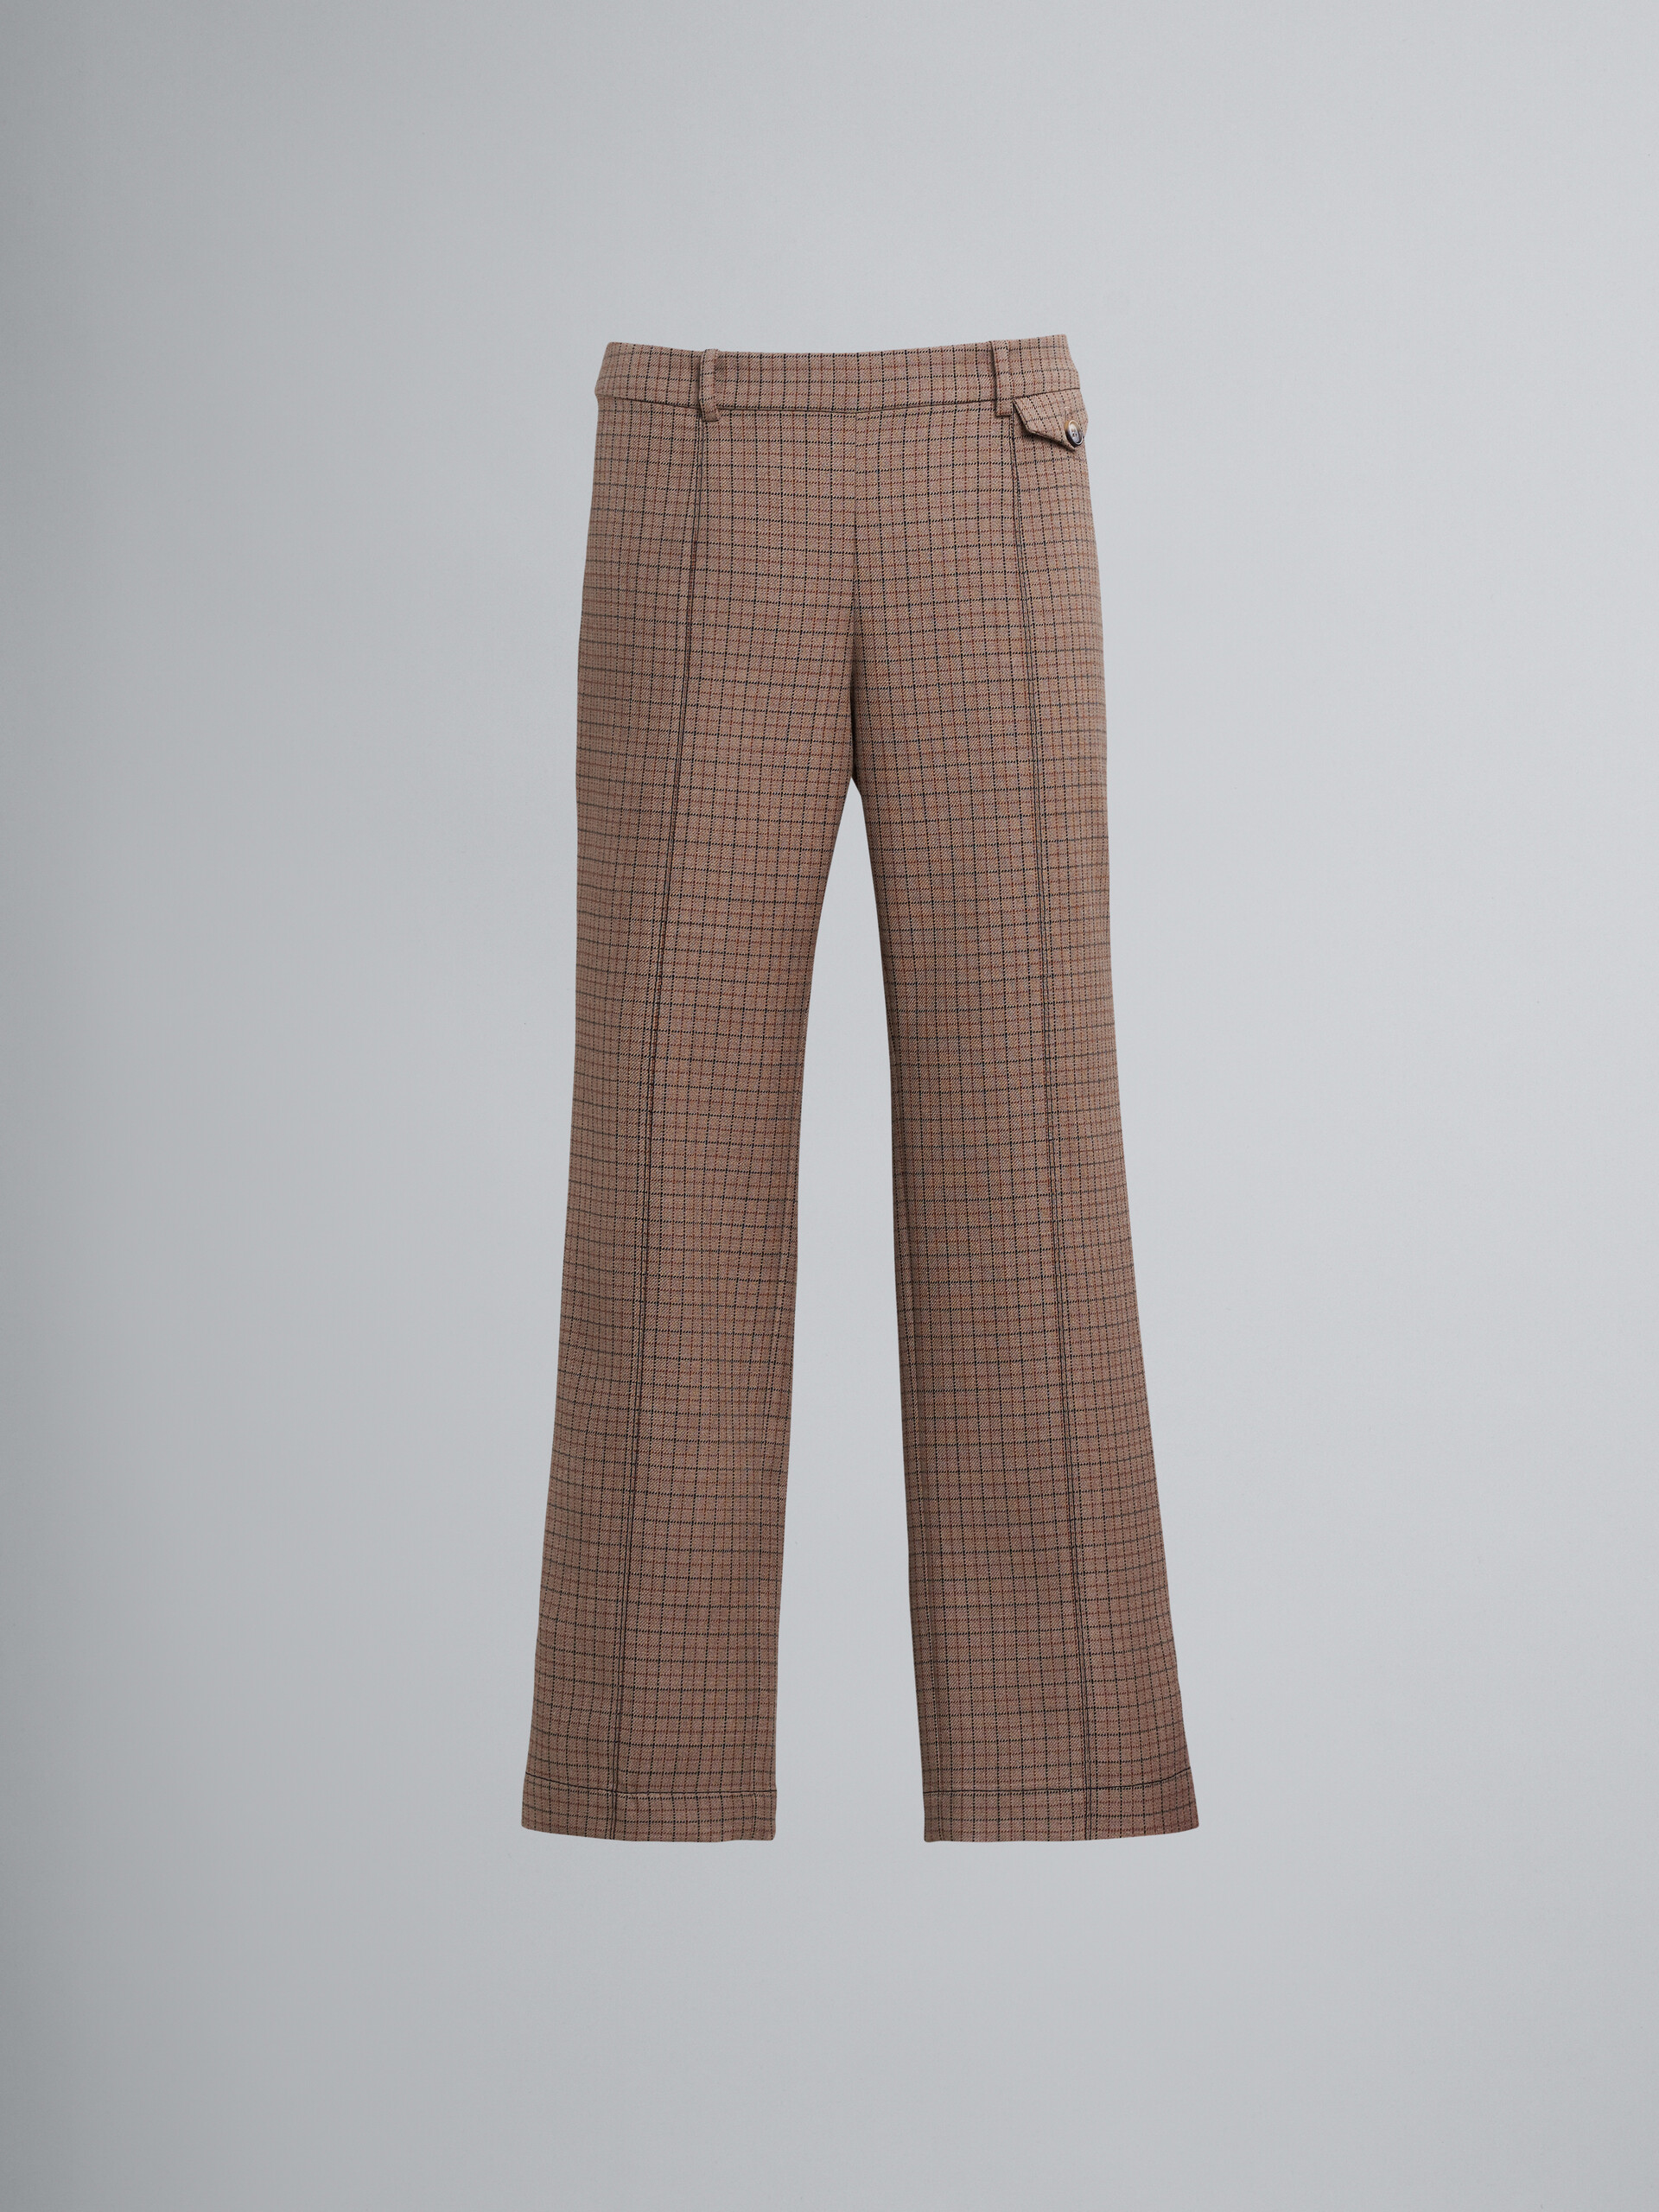 Check wool trousers | Marni